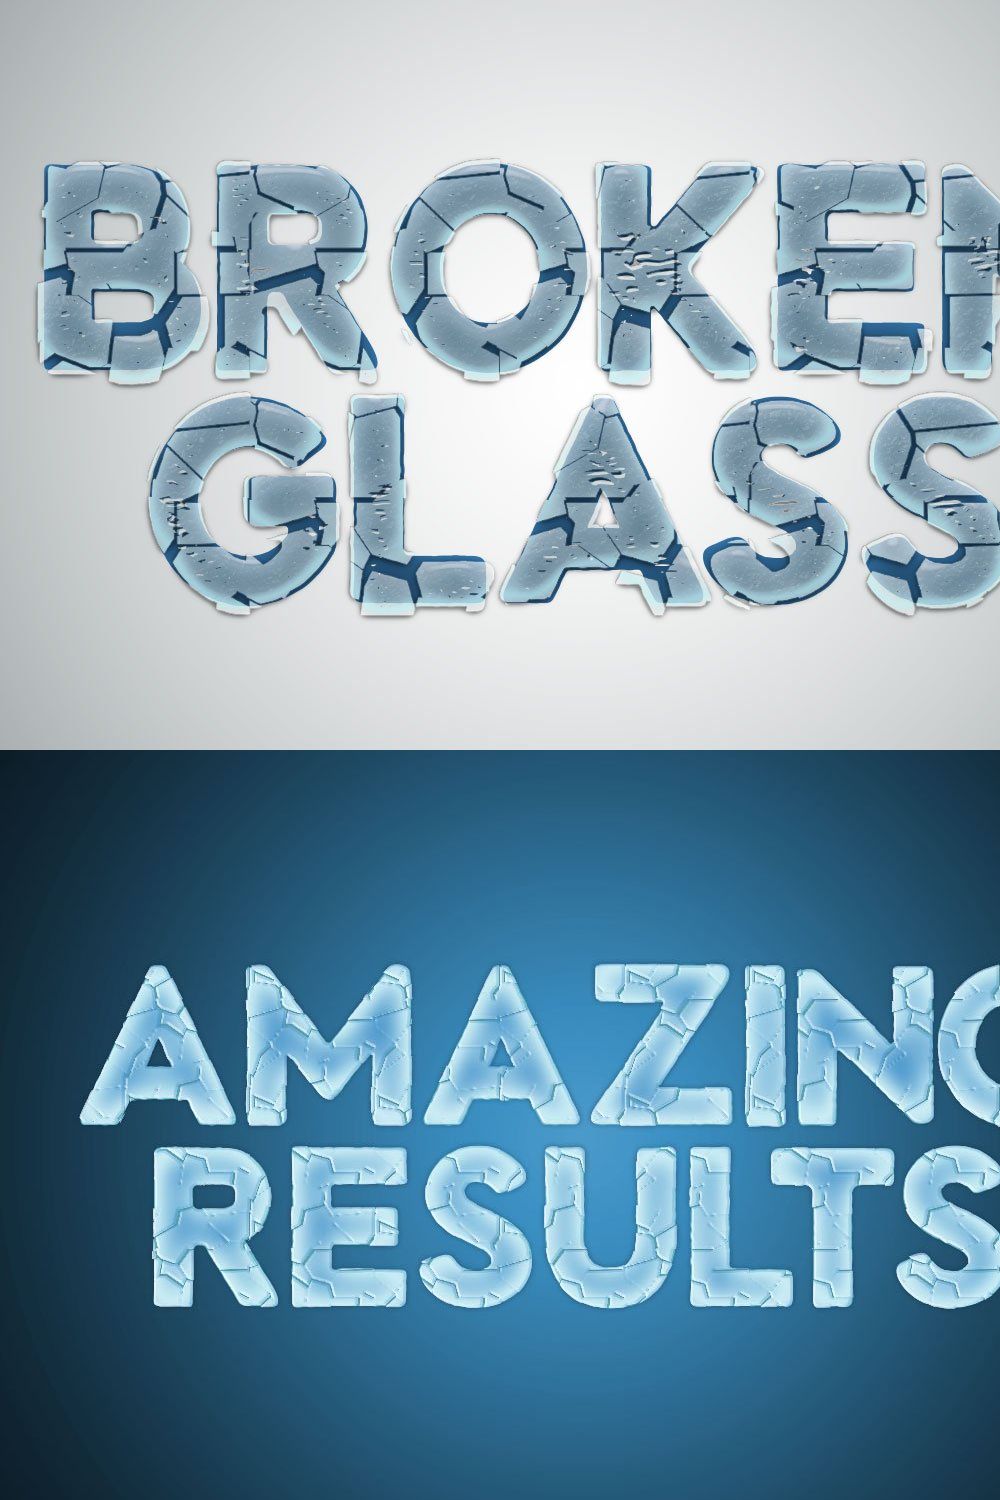 CG Broken Glass Actions v2.0 pinterest preview image.